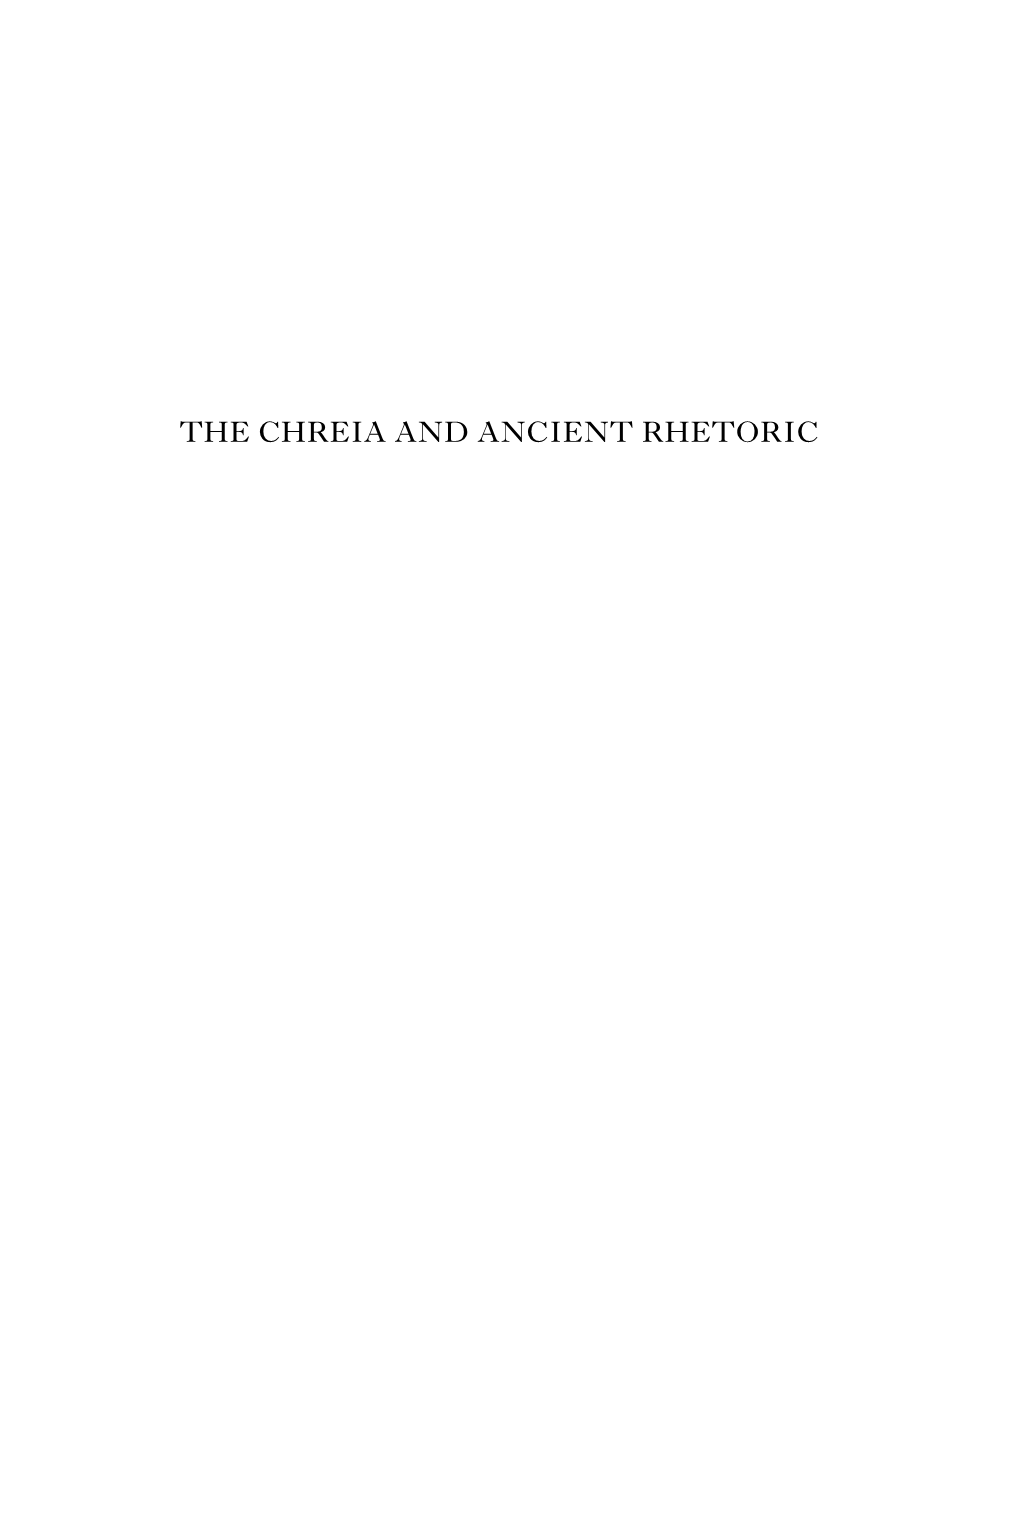 THE CHREIA and ANCIENT RHETORIC Society of Biblical Literature